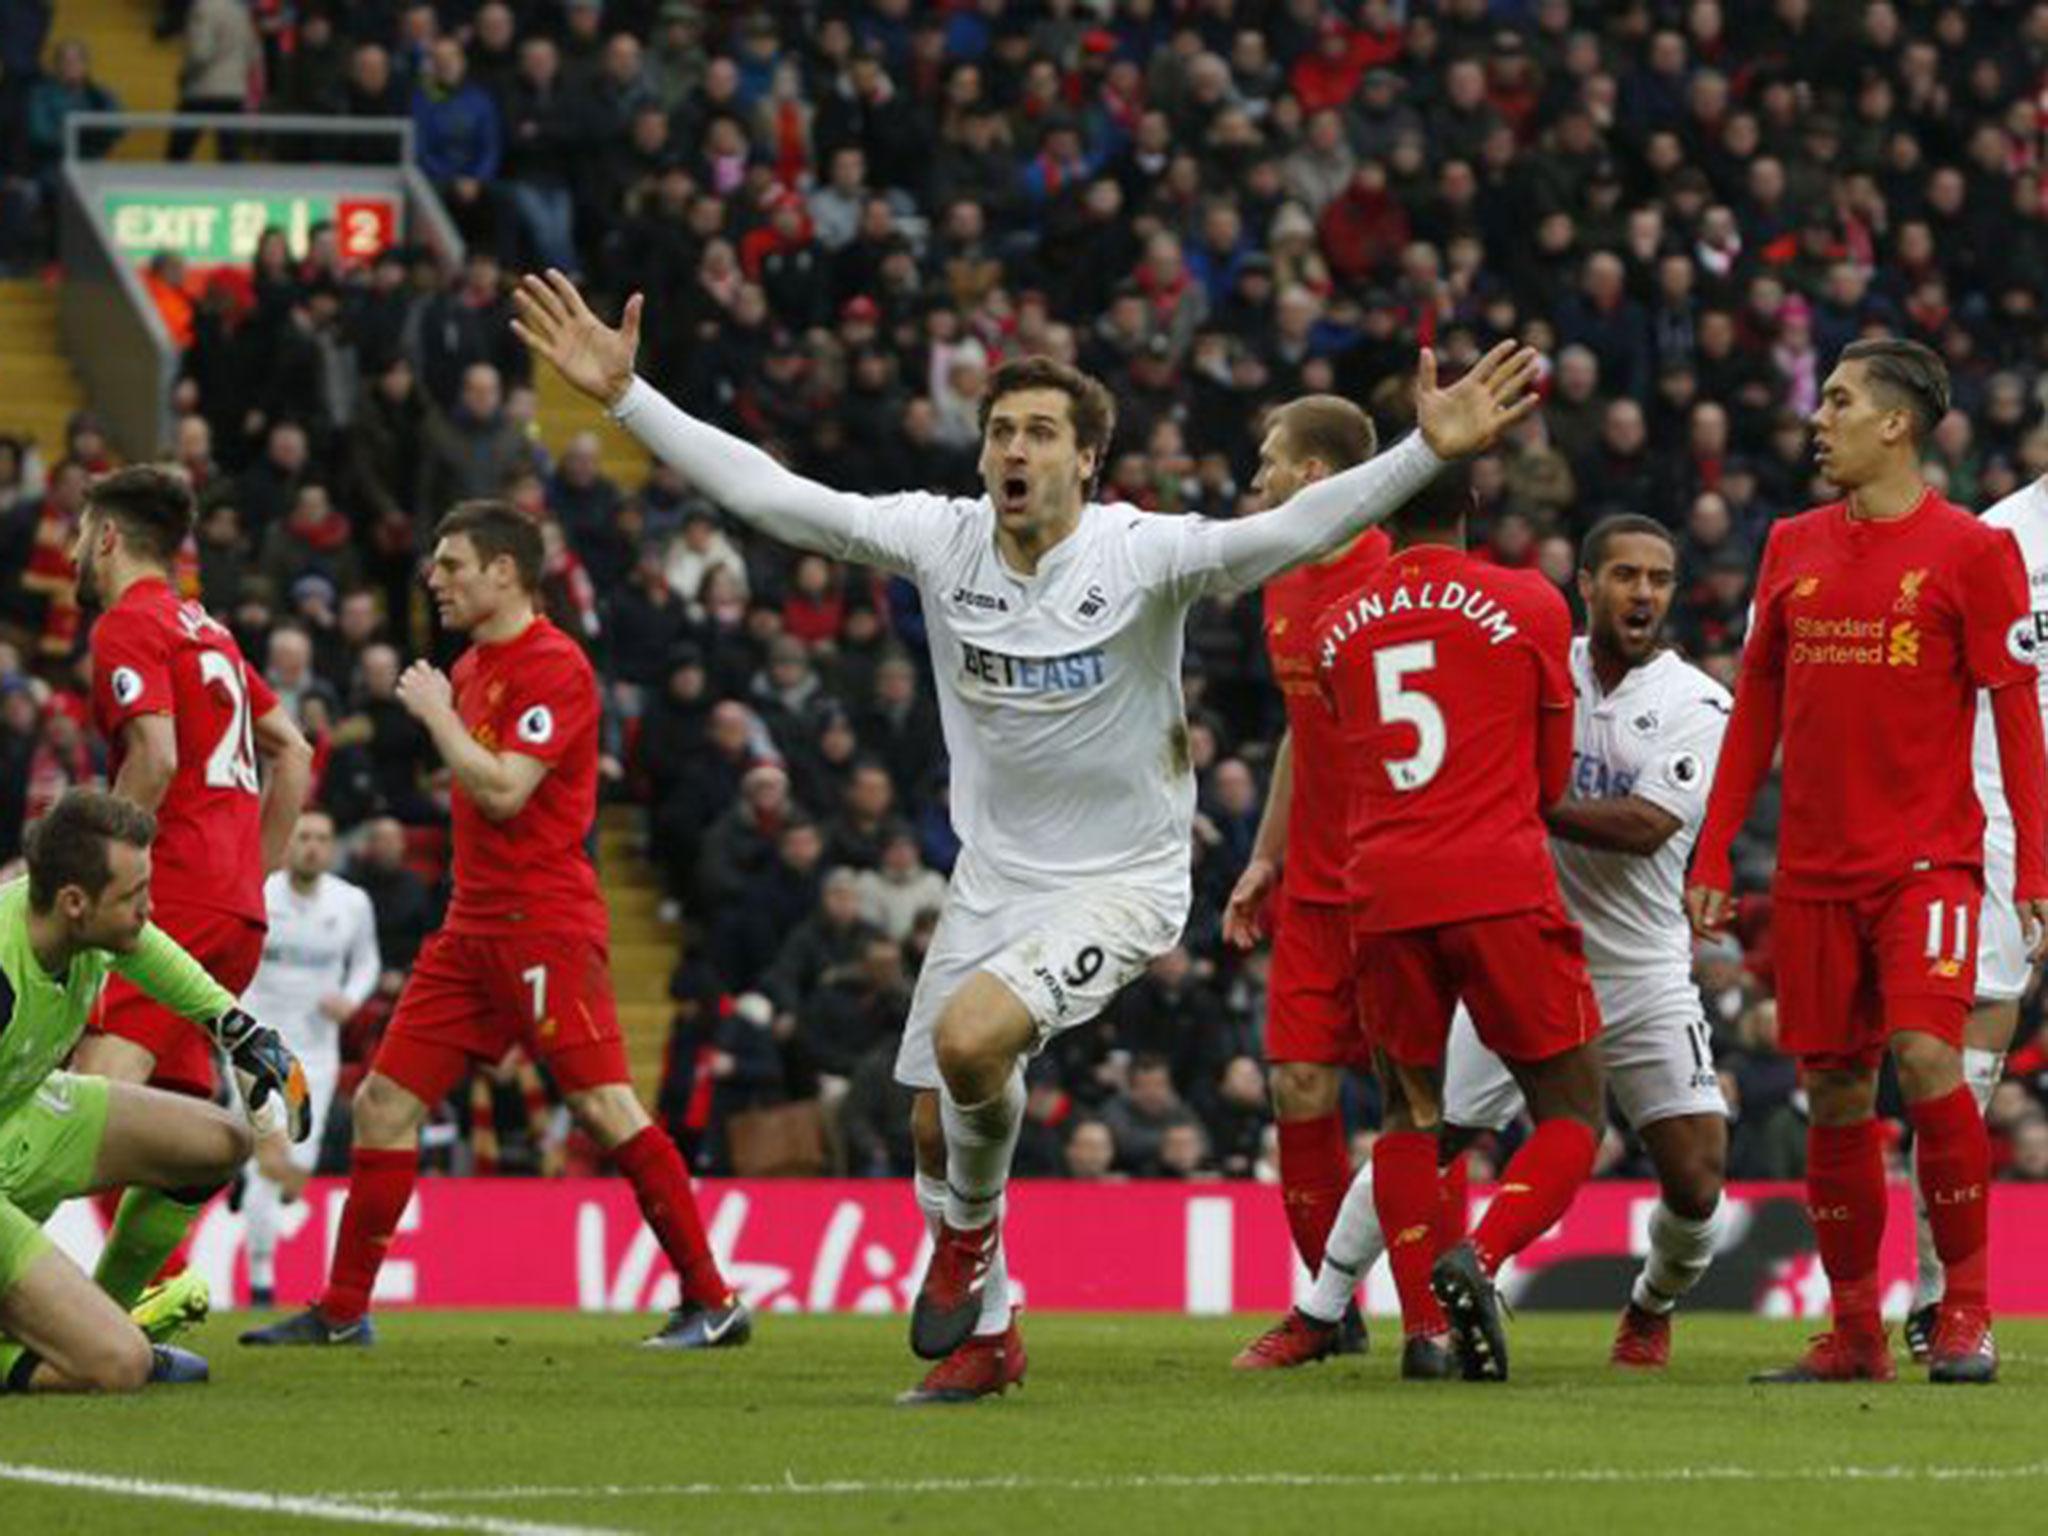 Fernando Llorente celebrates scoring the first goal for Swansea against Liverpool